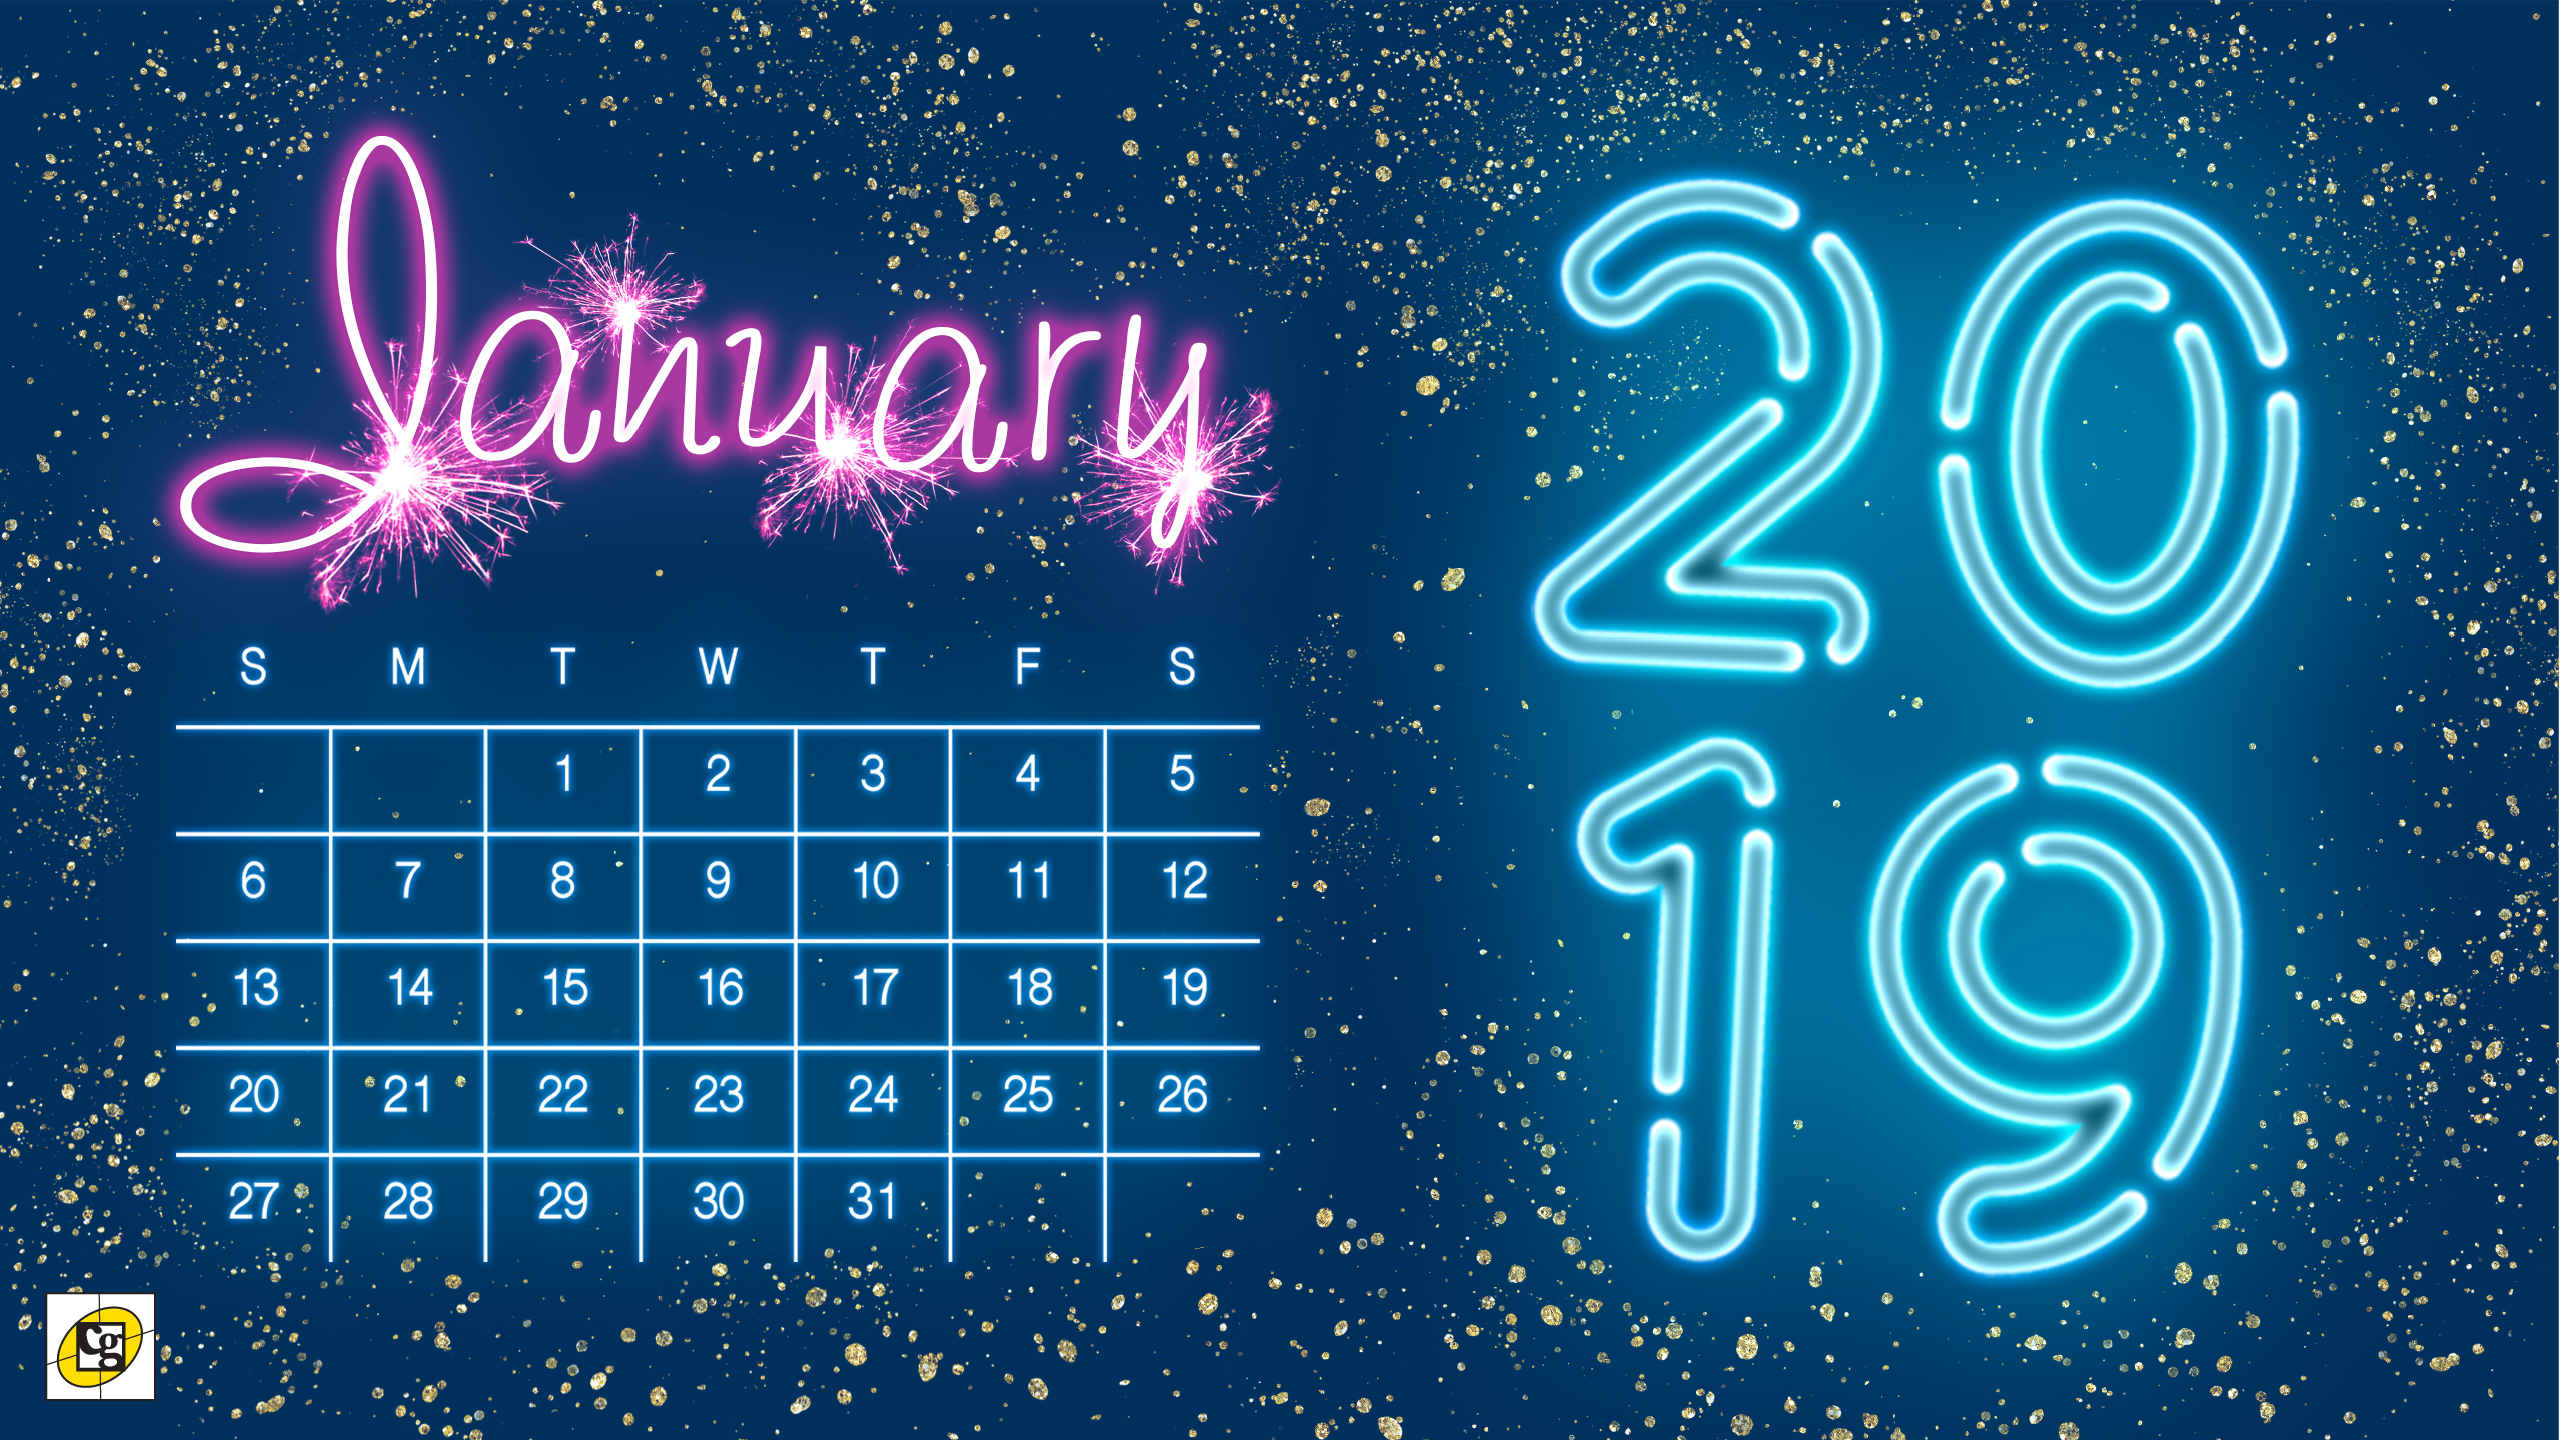 free-download-january-2019-desktop-calendar-composure-graphics